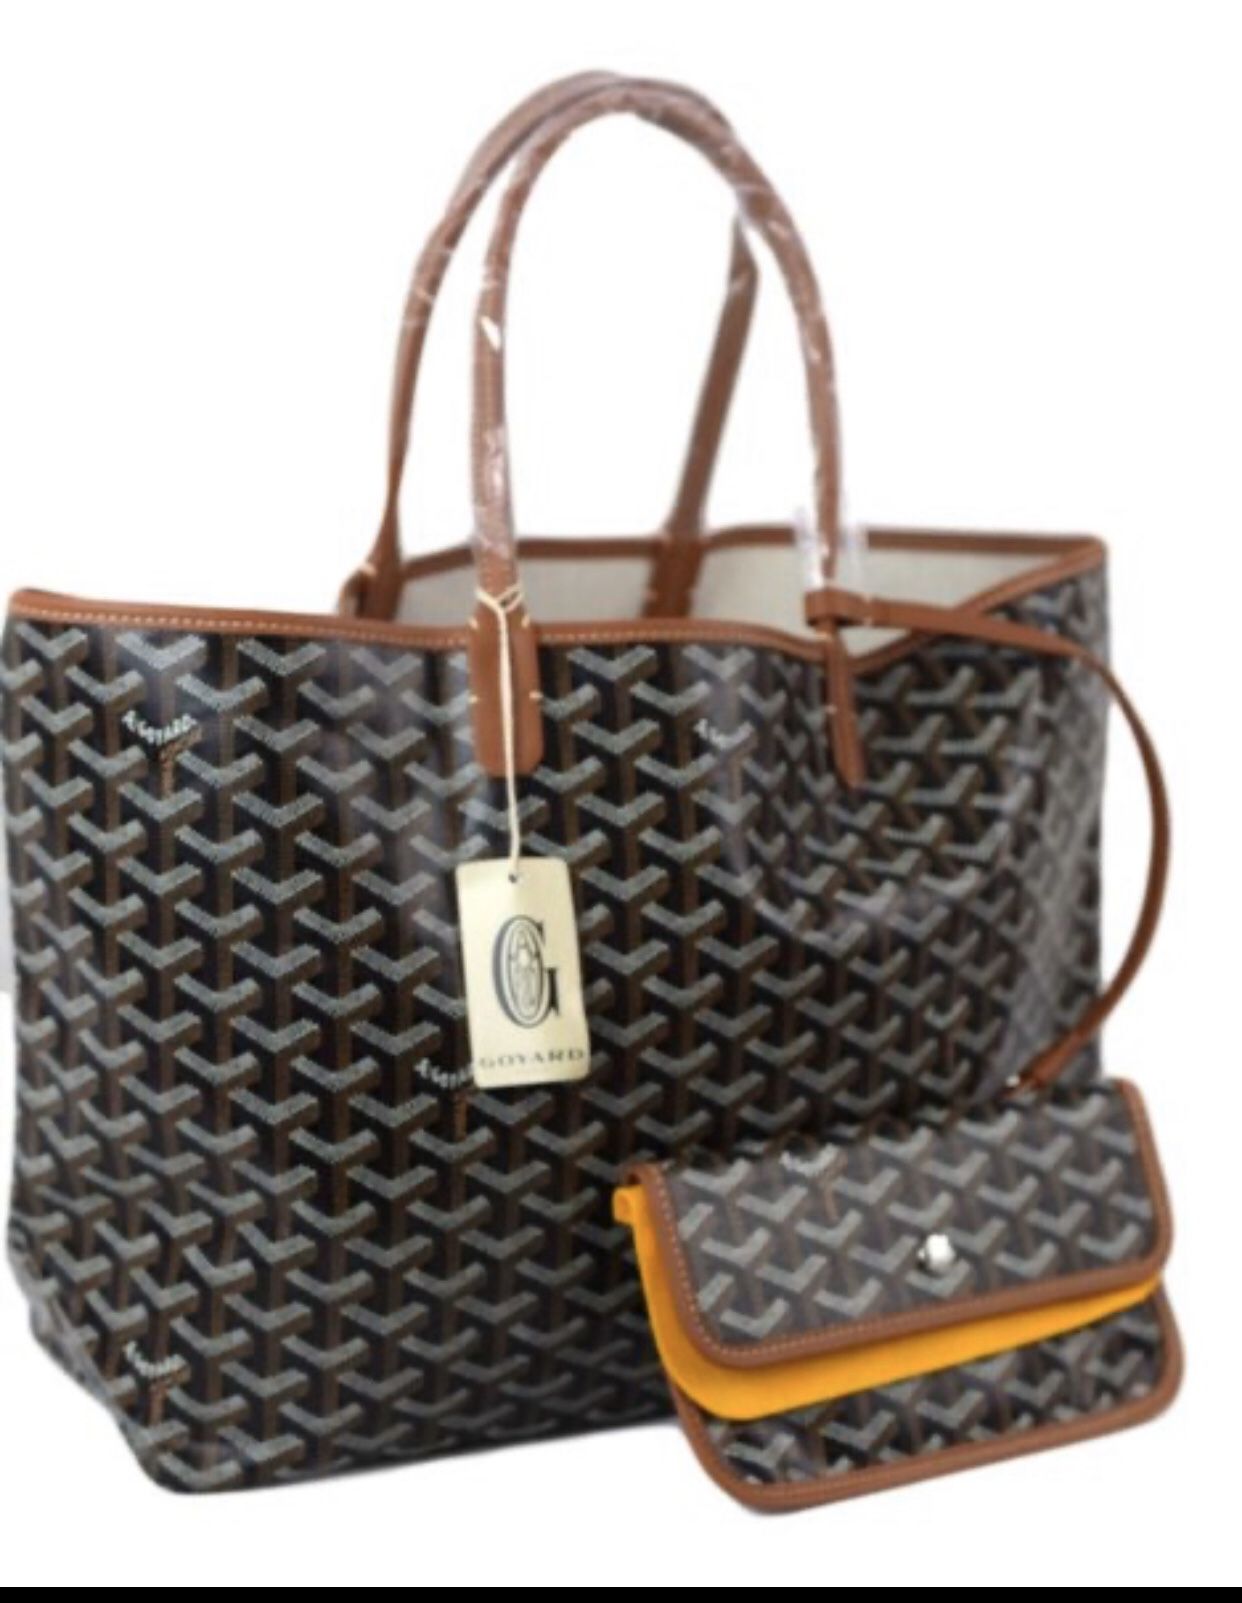 Black and brown GoYARD Tote bag with mini purse